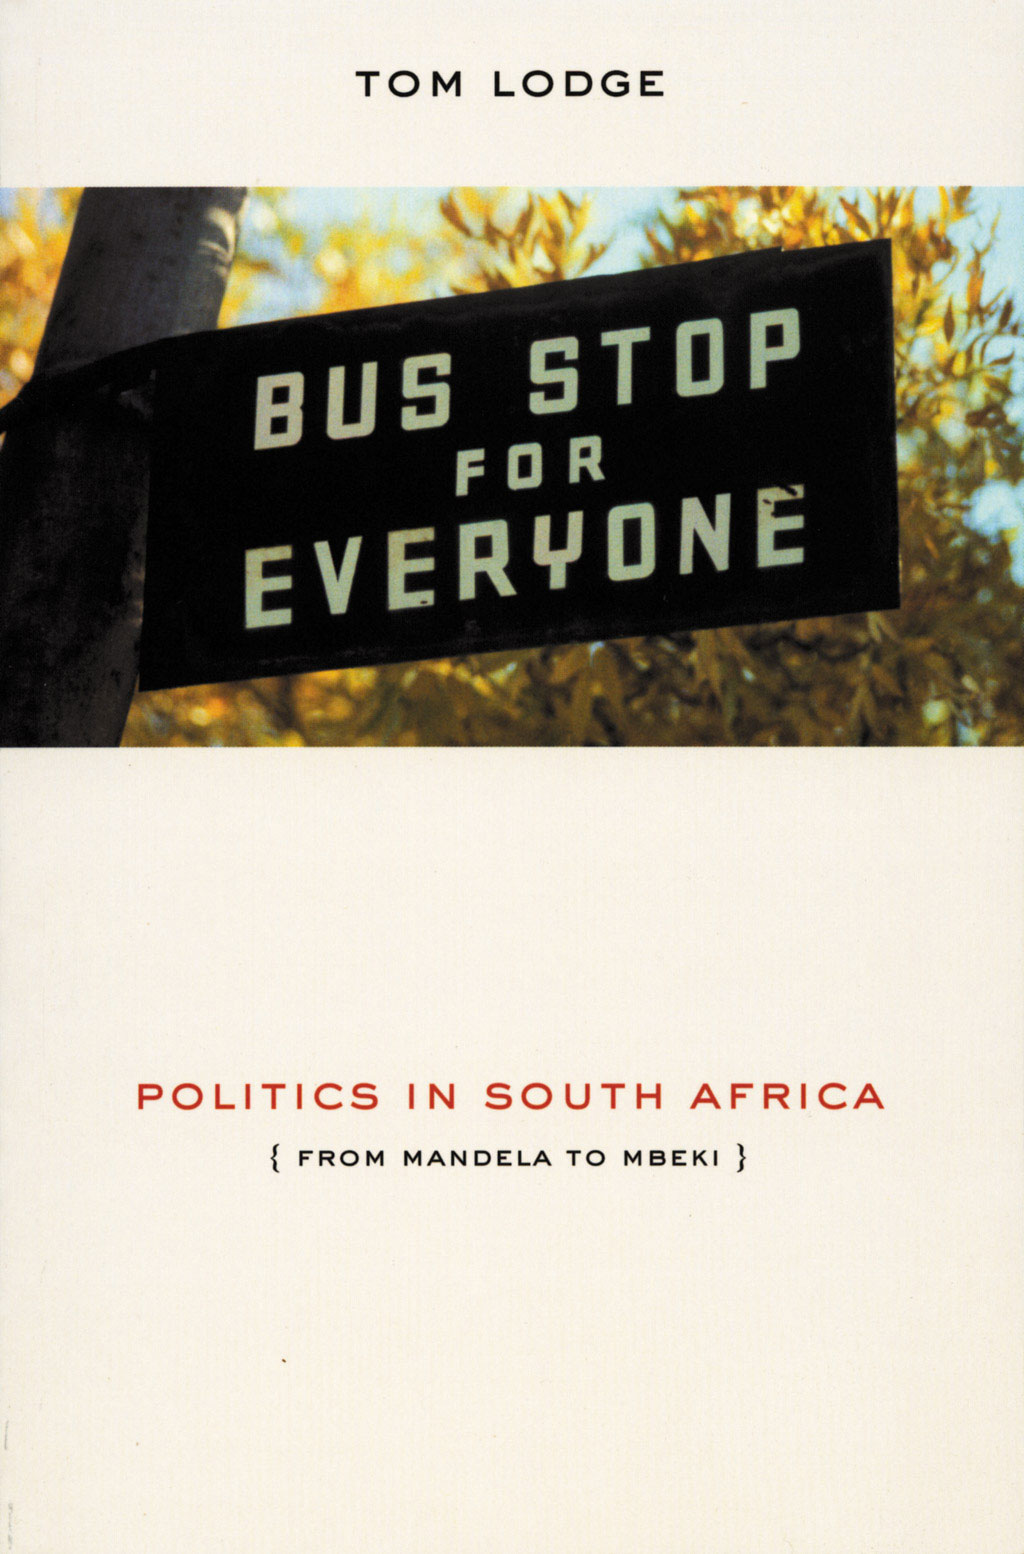 POLITICS IN SOUTH AFRICA: From Mandela to Mbeki